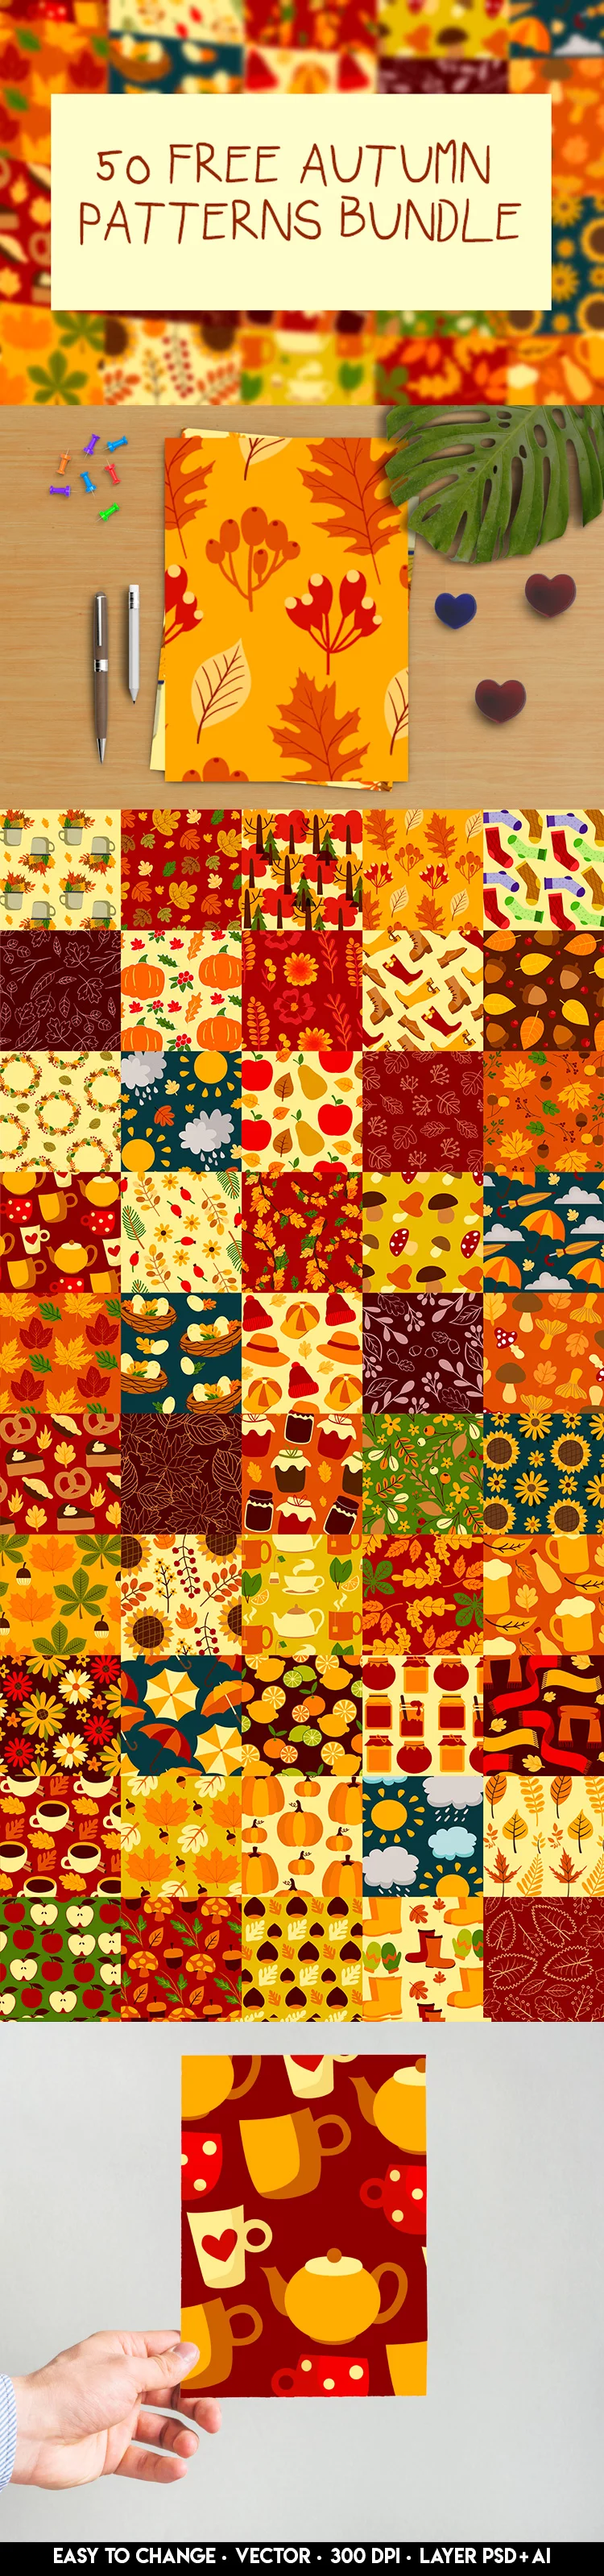 50 Free Autumn Patterns Bundle